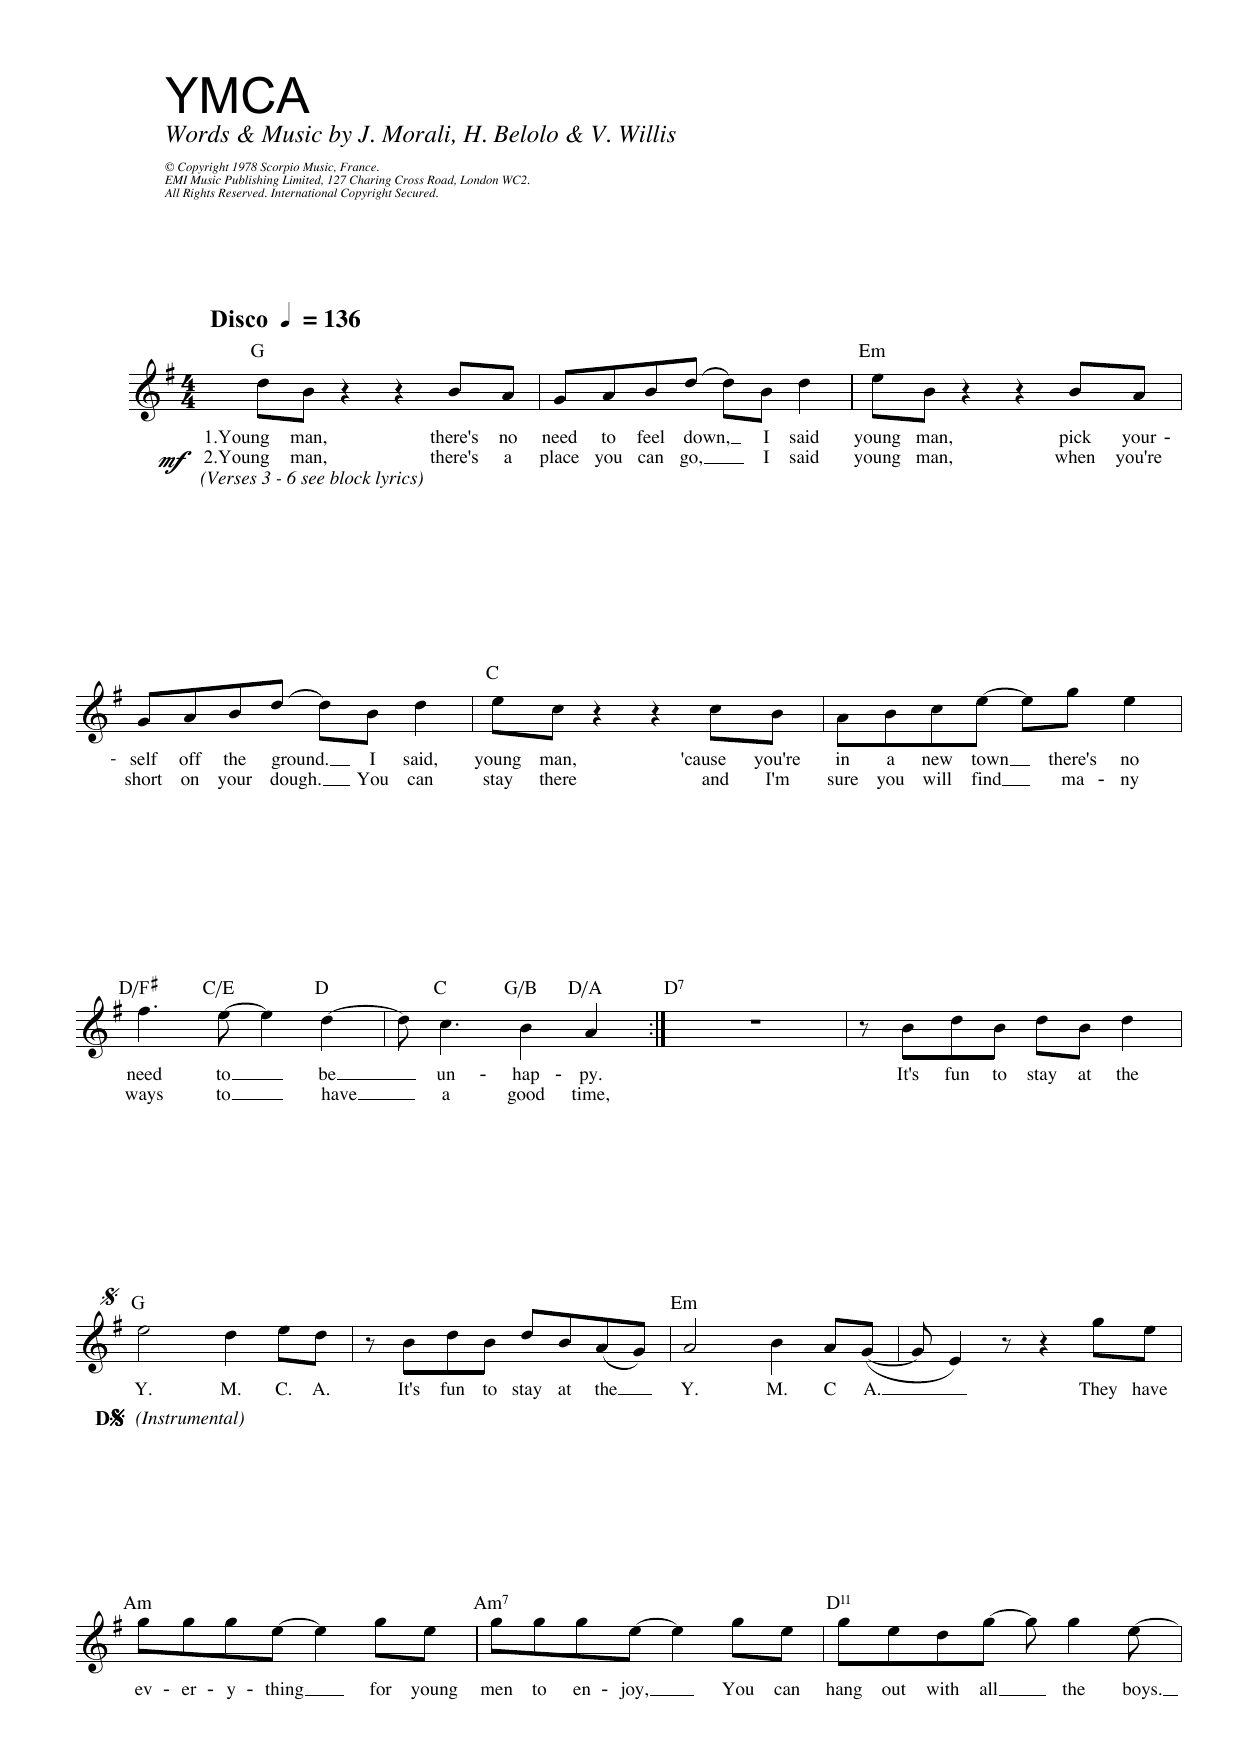 Village People Y.M.C.A. sheet music notes printable PDF score